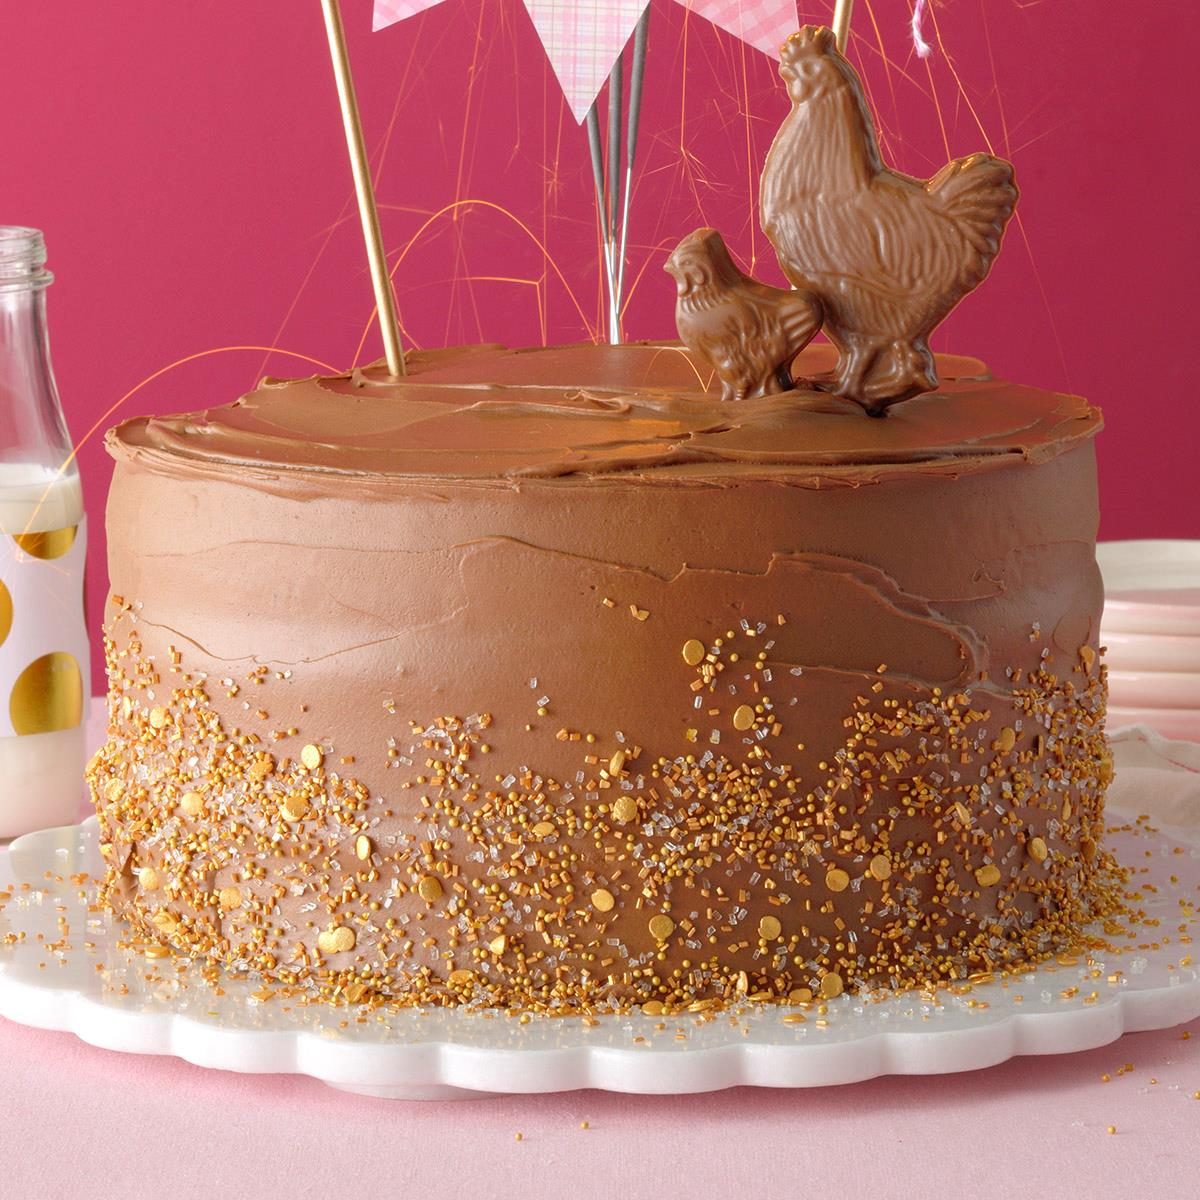 Sour Cream Chocolate Cake Recipe: How to Make It